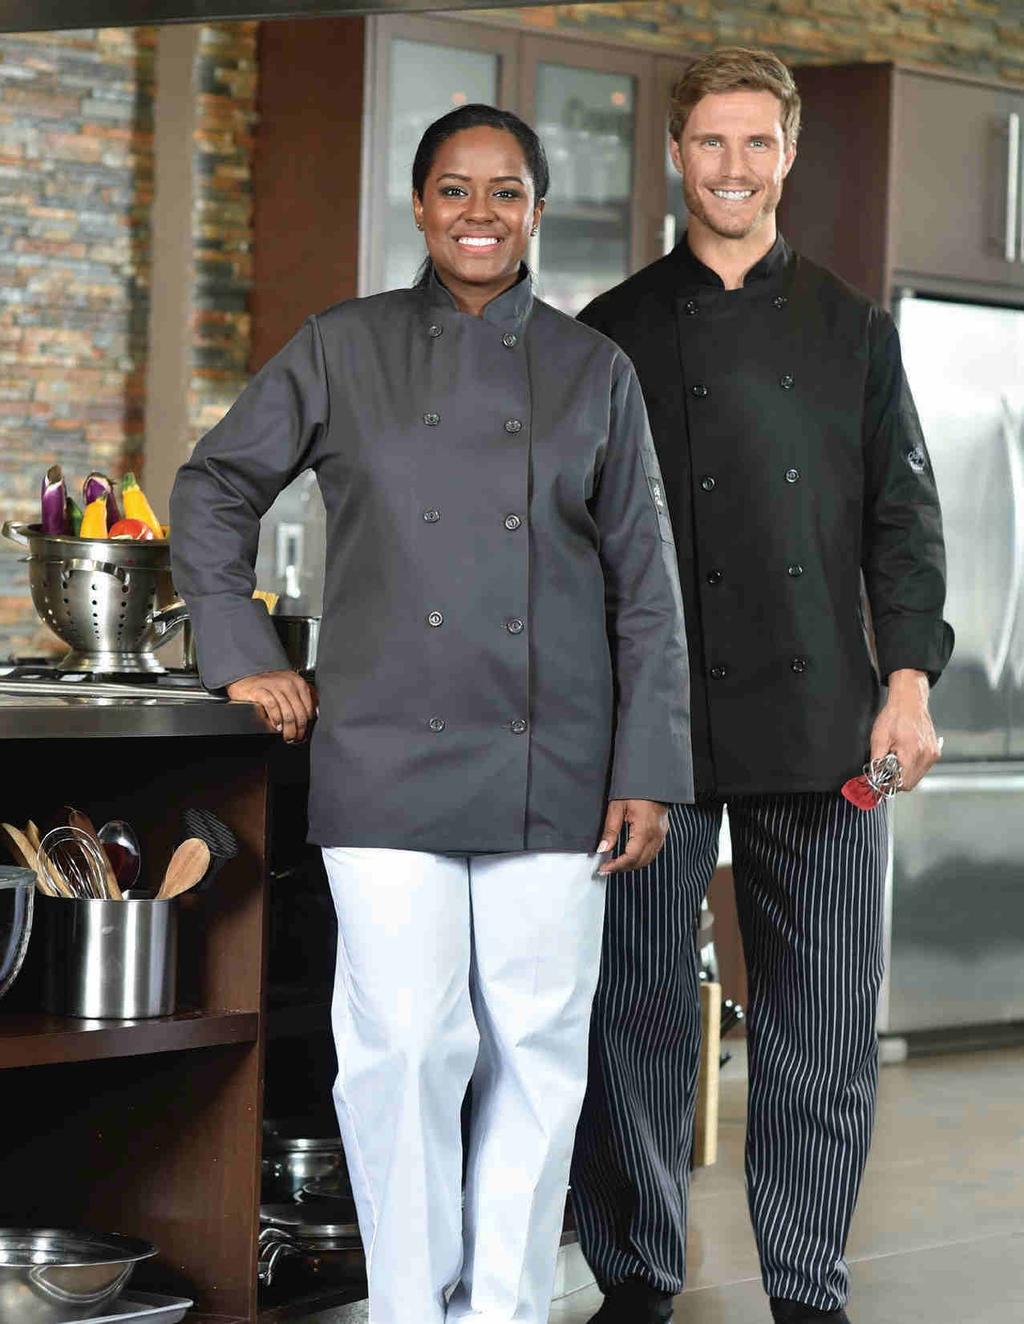 CHEF COATS 5353-BK Coloured Chef Coats Providing an elegant look, these Twill Fabric chef coats provide a crisp presentation.